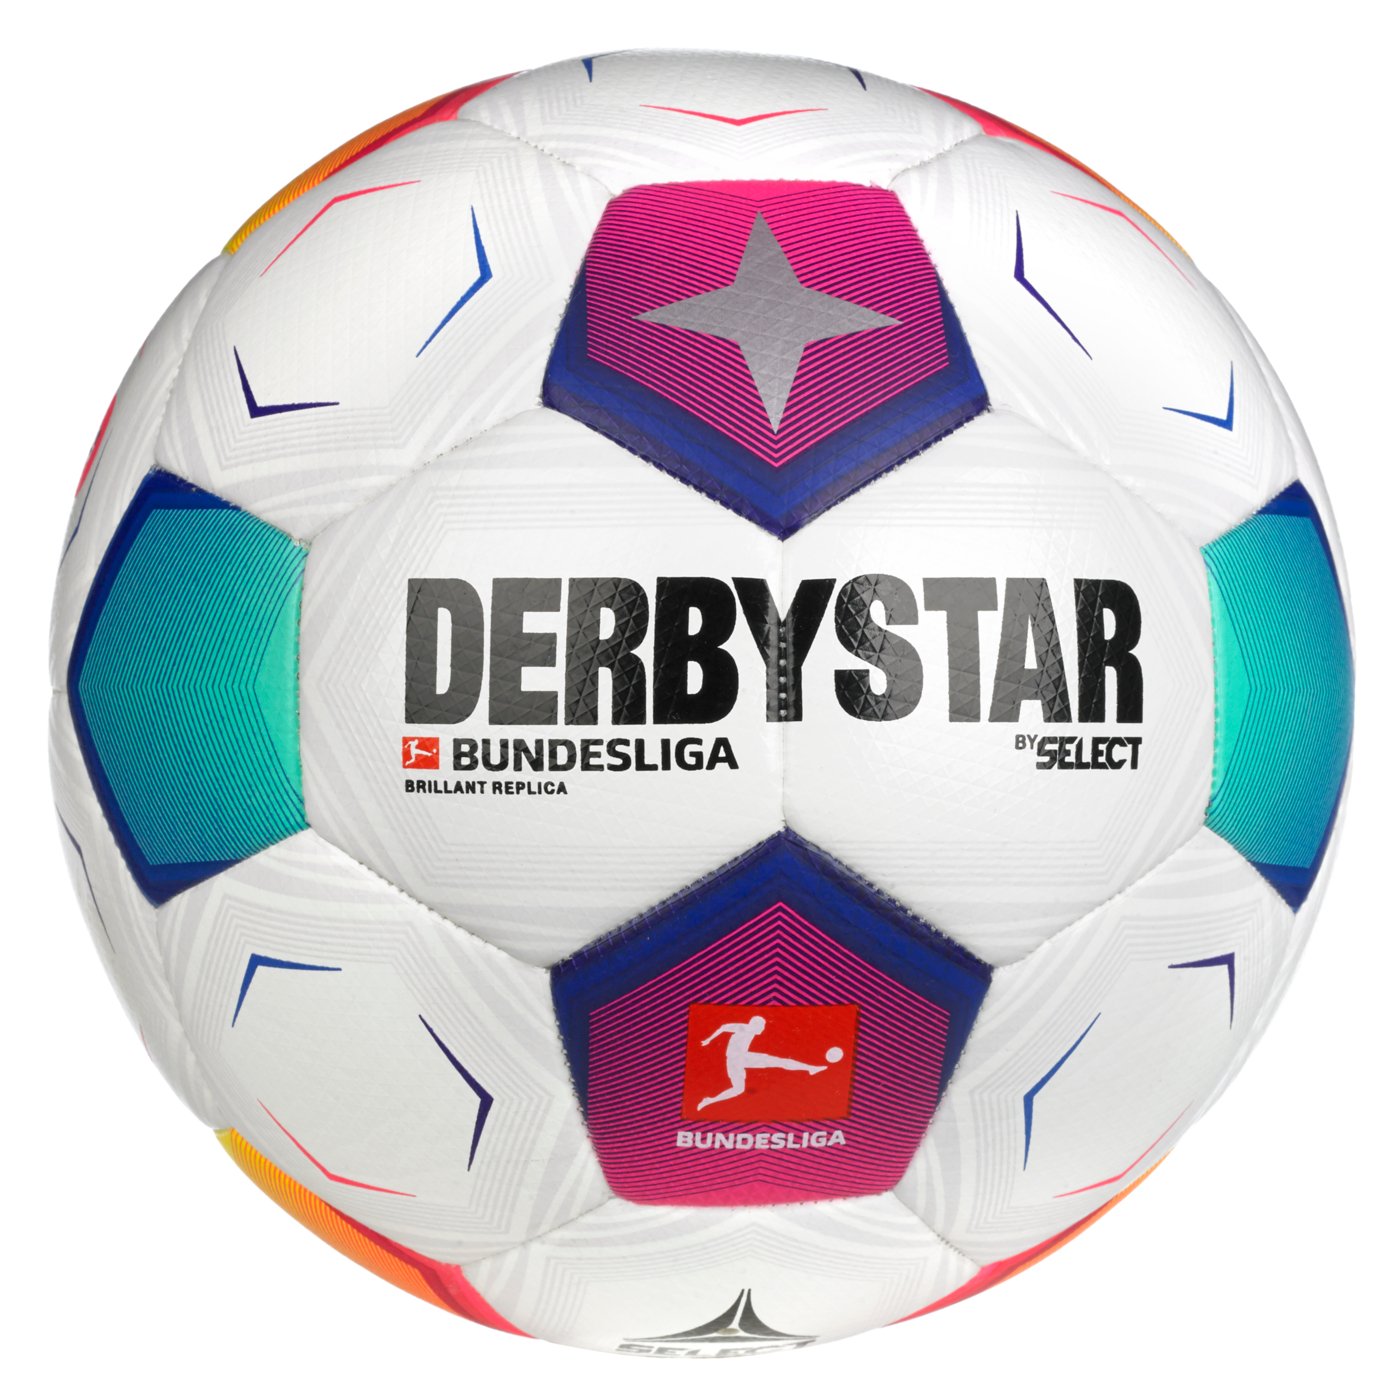 М'яч футбольний SELECT DERBYSTAR Bundesliga Brillant Replica v23 (672) біло/син/фіолет, 4, 4